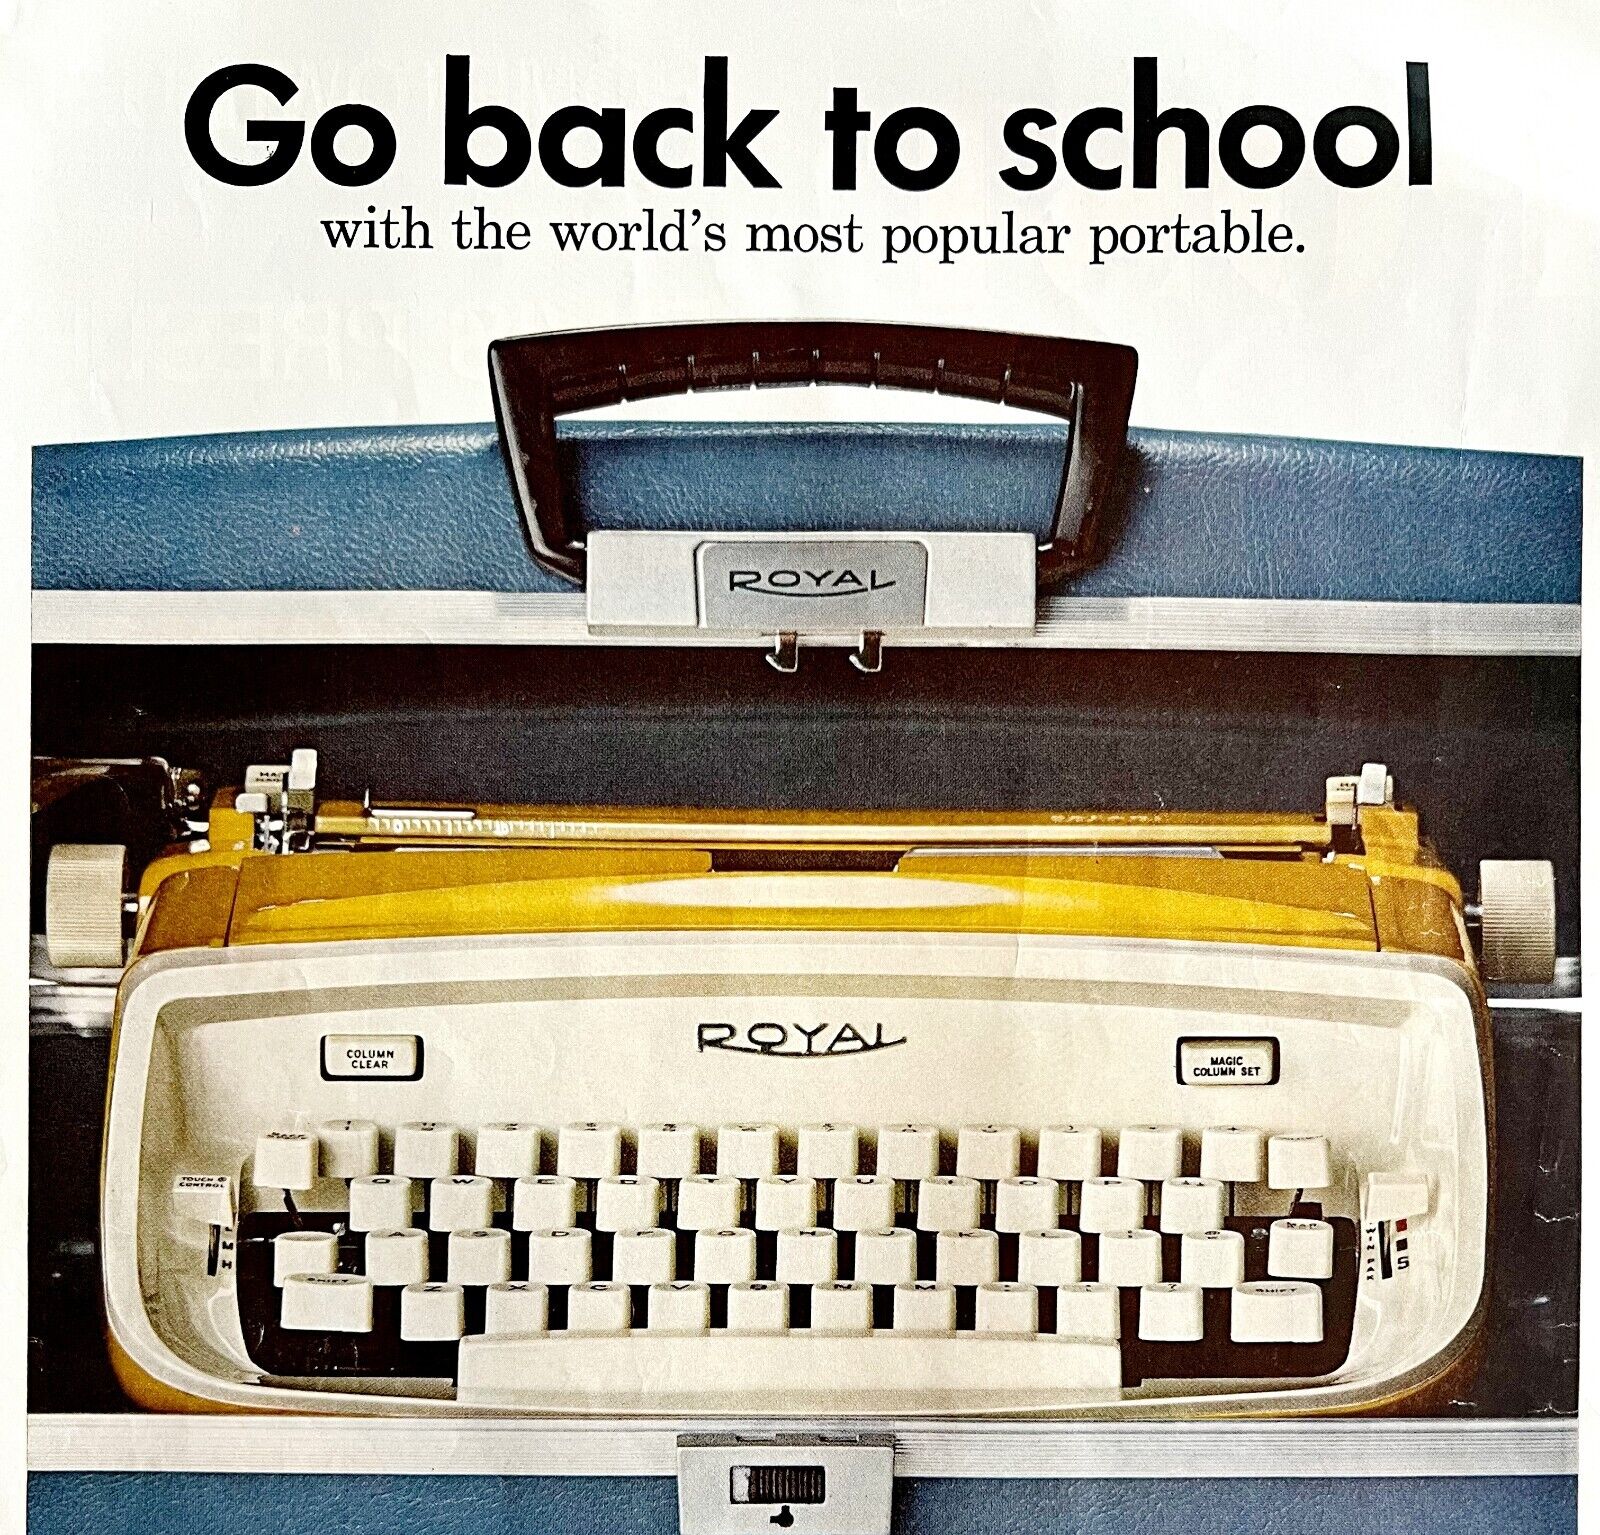 Royal Portable Safari Typewriter 1965 Advertisement Kodak Hawkeye Camera DWII1